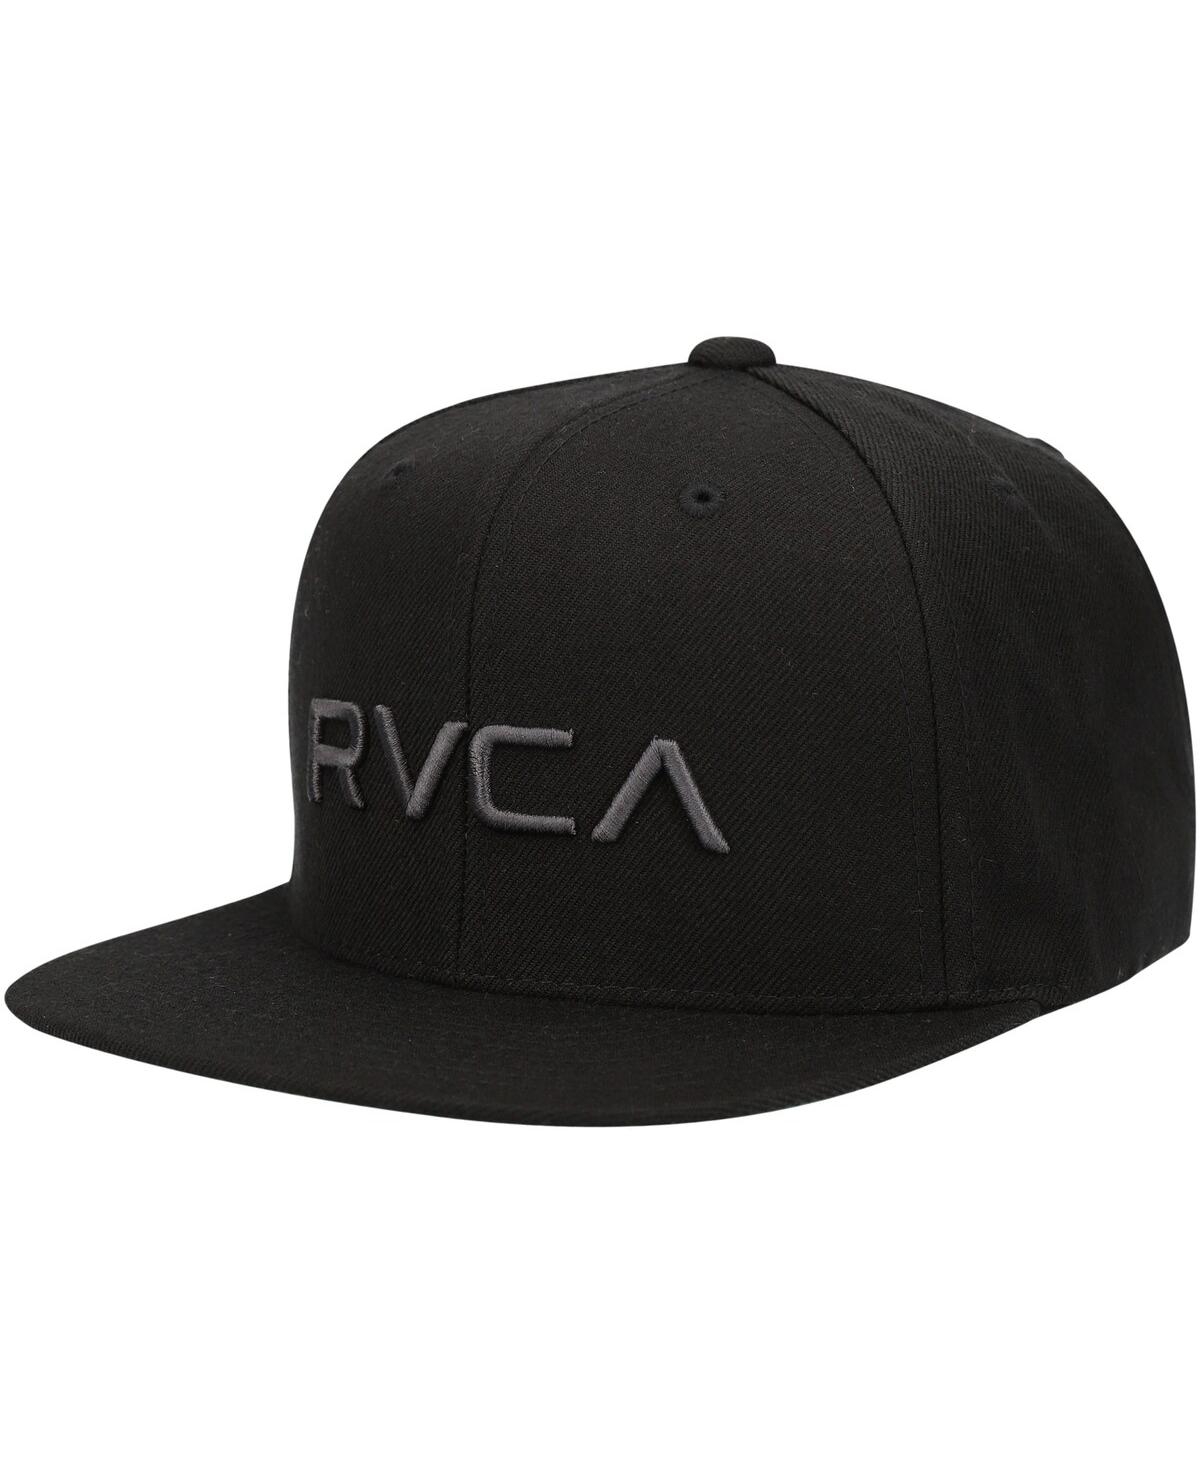 RVCA BOYS BLACK BIG BOYS AND GIRLS TWILL SNAPBACK ADJUSTABLE HAT